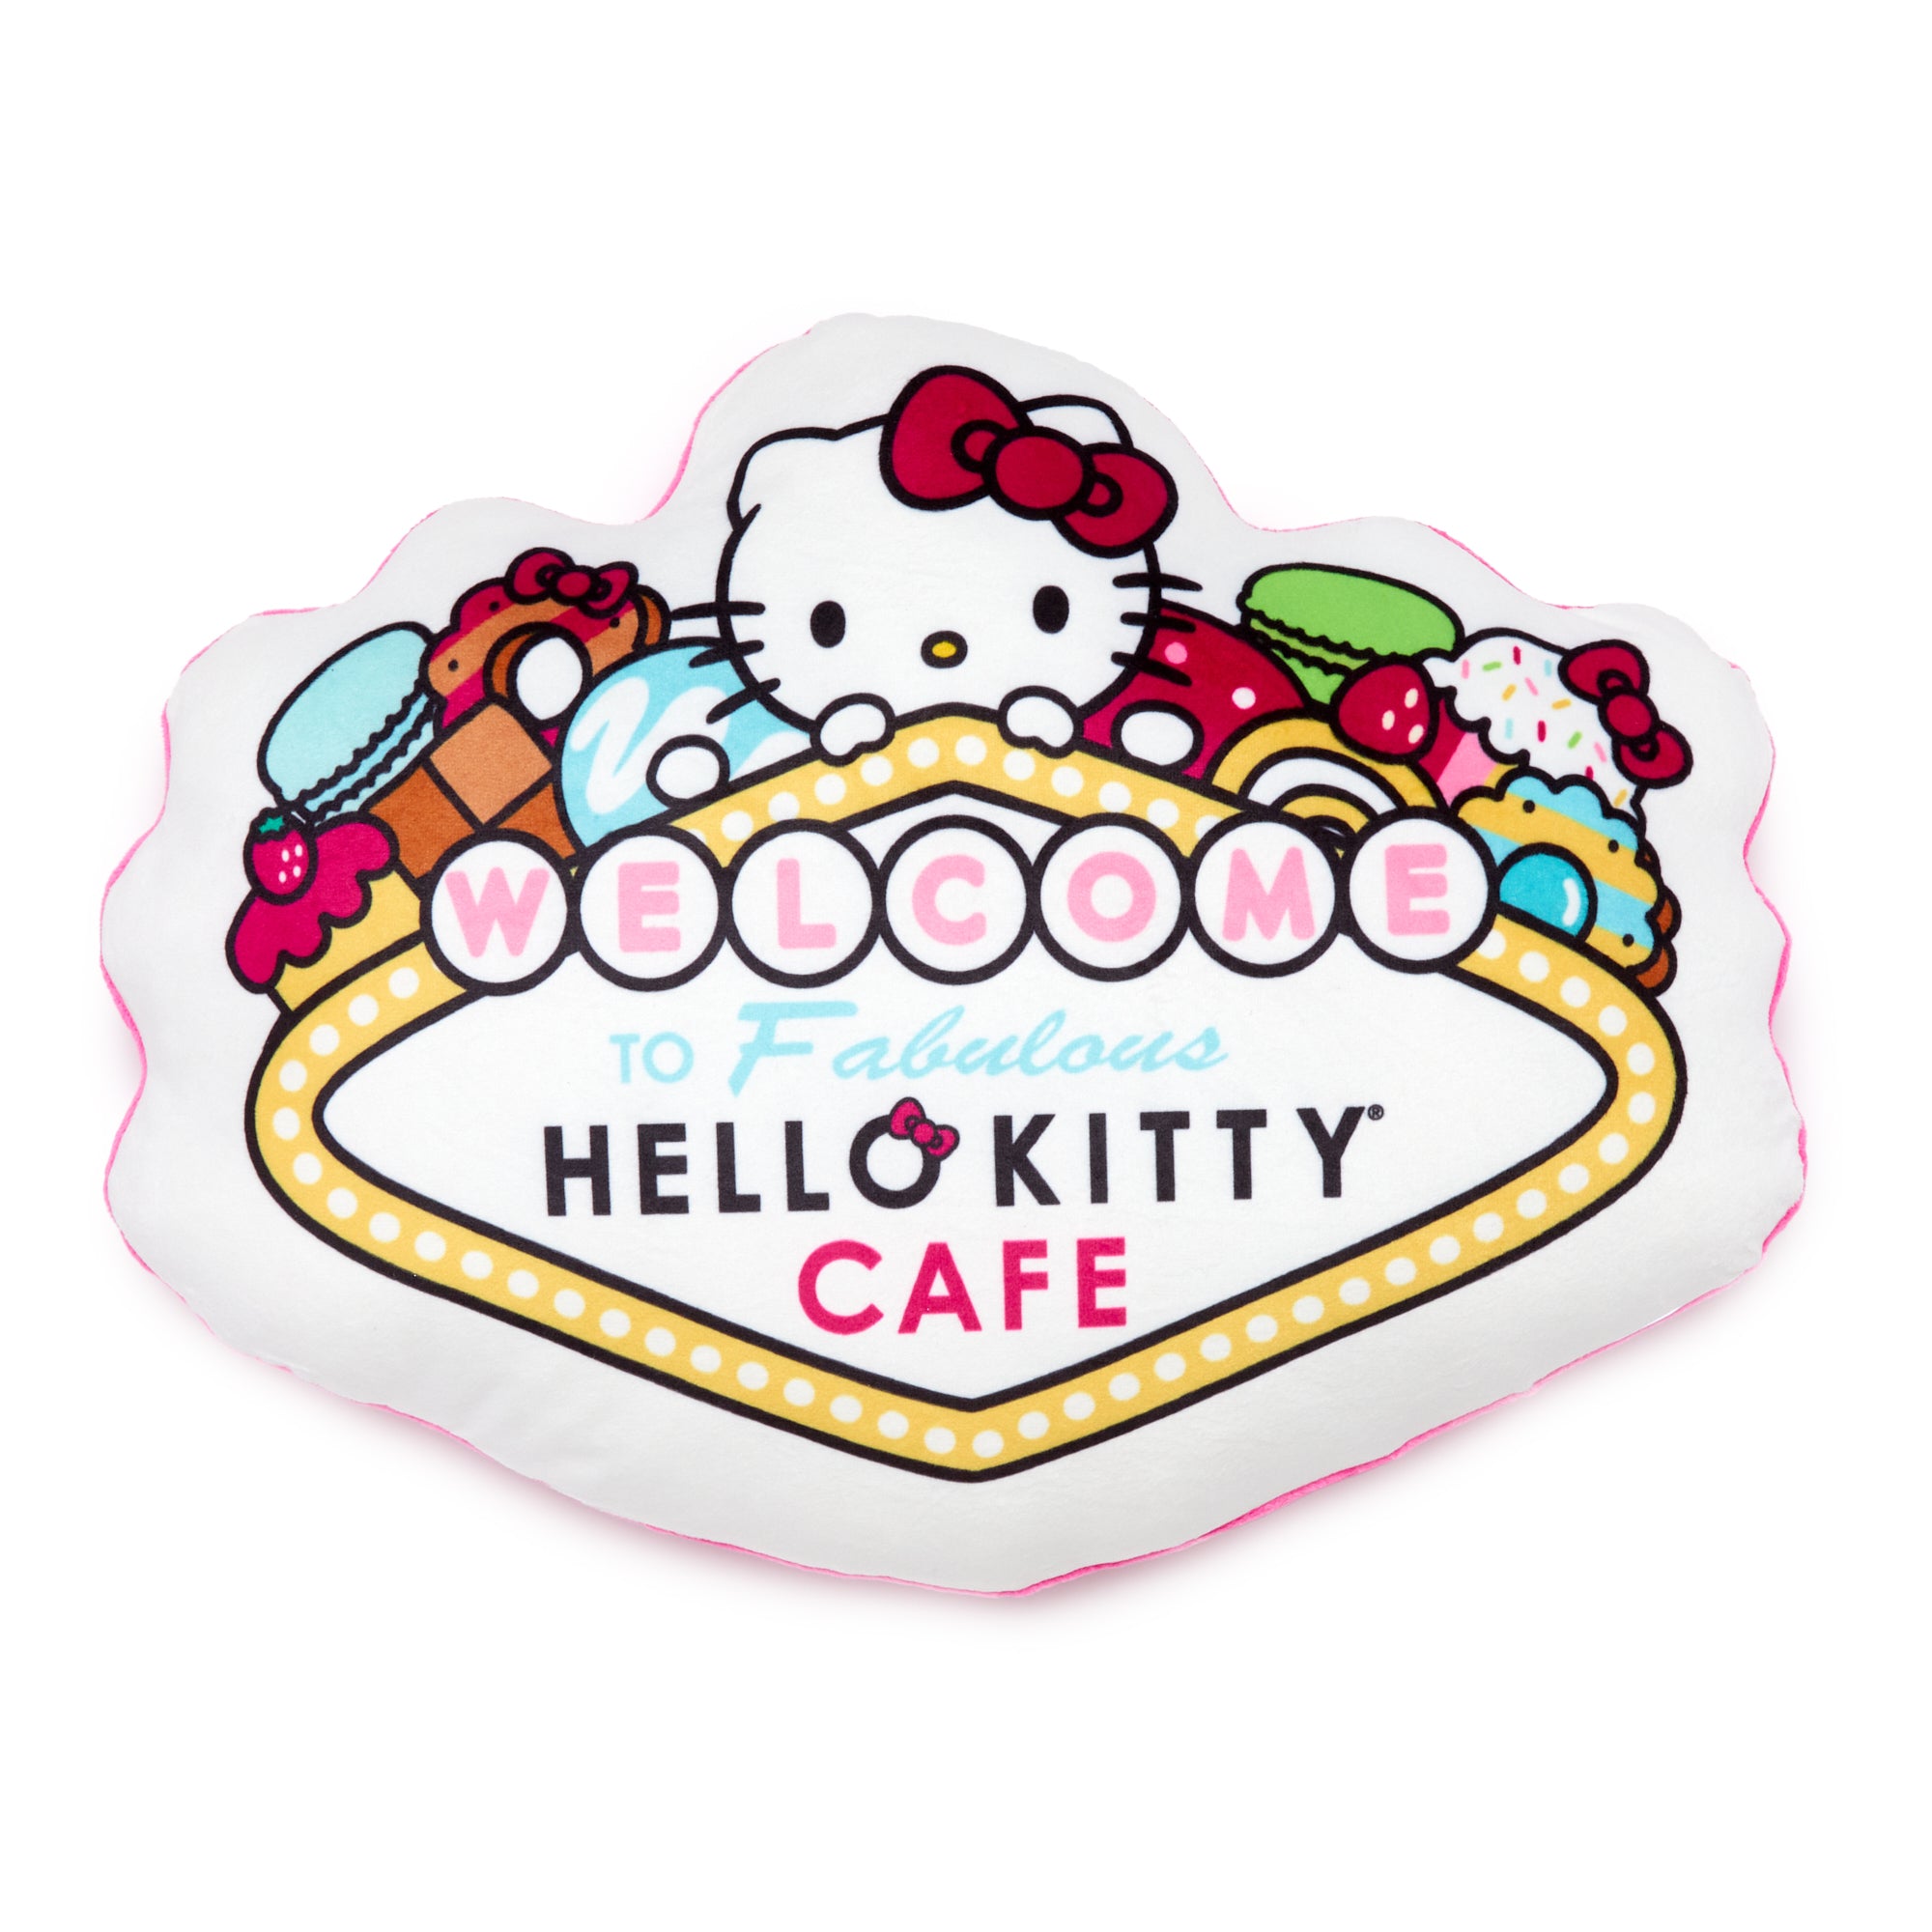 Hello Kitty Cafe Las Vegas Fashion Show Available Merch #hellokittyhun